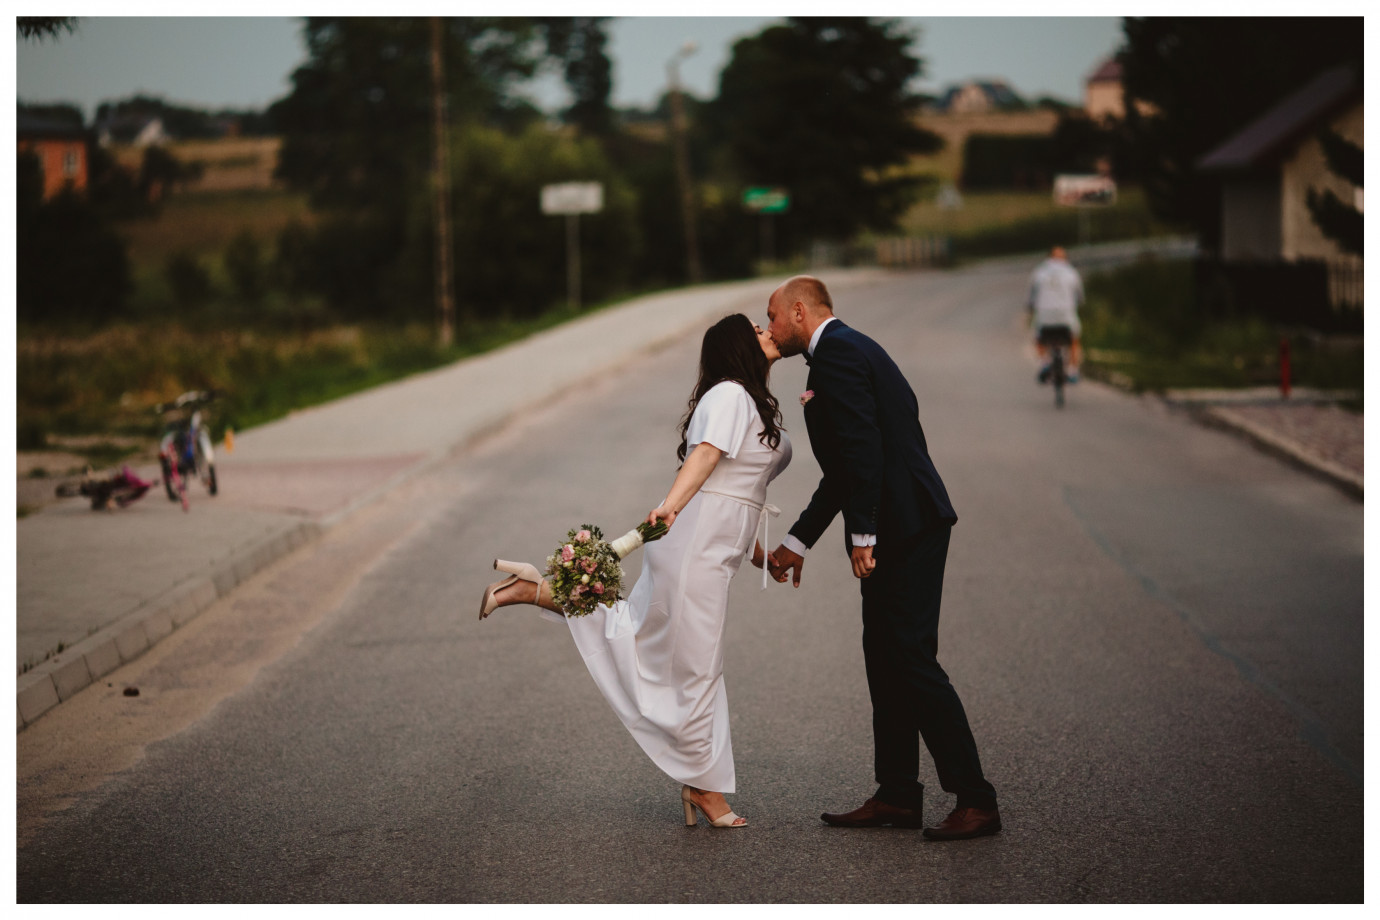 fotograf trojmiasto sebastian-skopek portfolio zdjecia slubne inspiracje wesele plener slubny sesja slubna